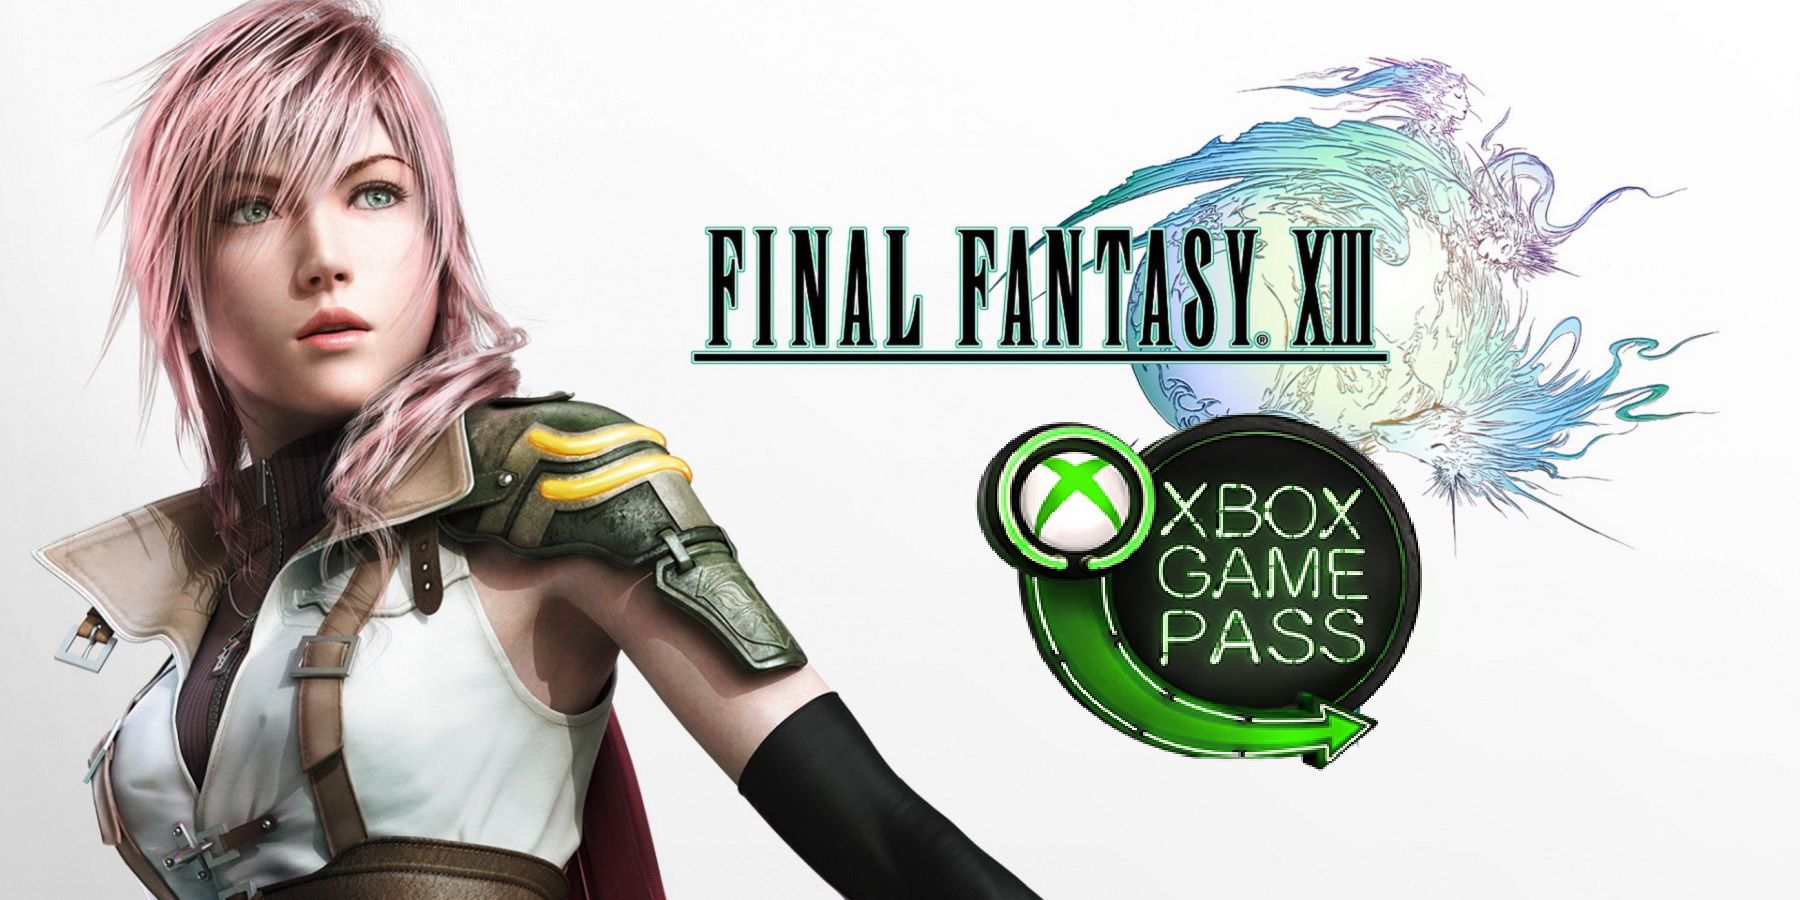 final fantasy 13 with xbox game pass logo